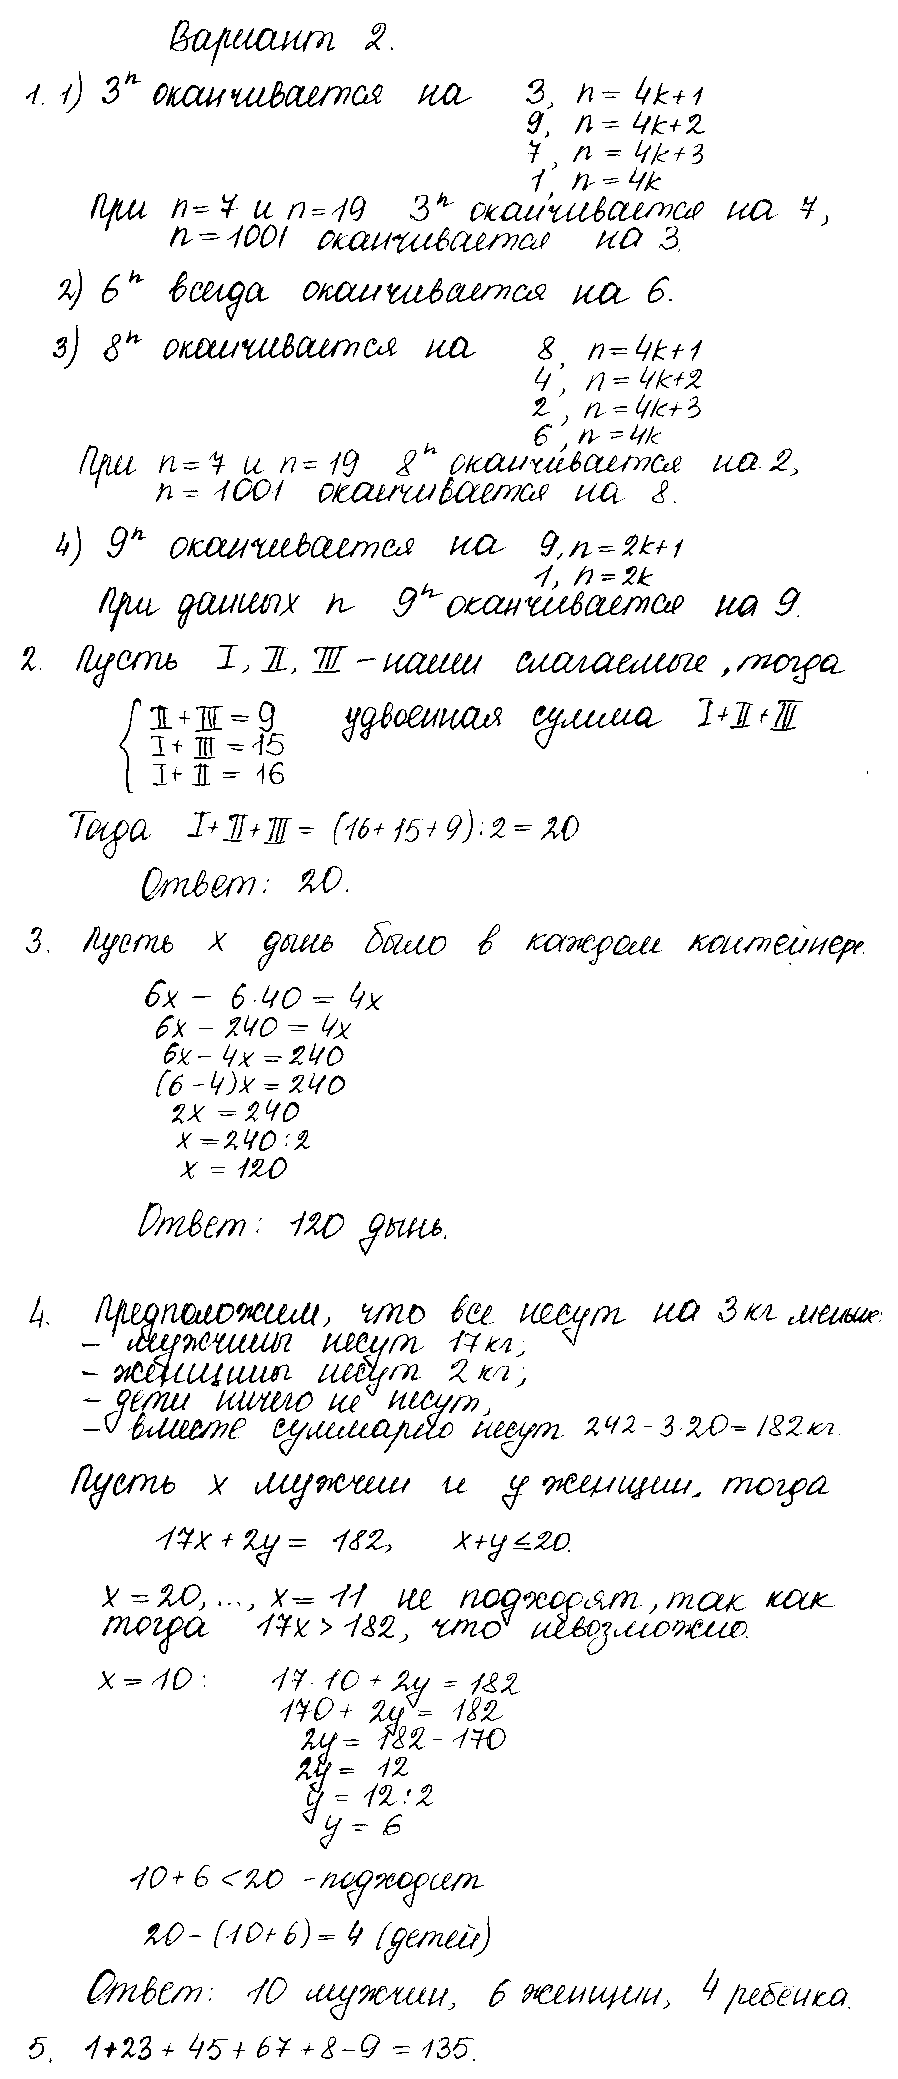 ГДЗ Математика 5 класс - Вариант 2